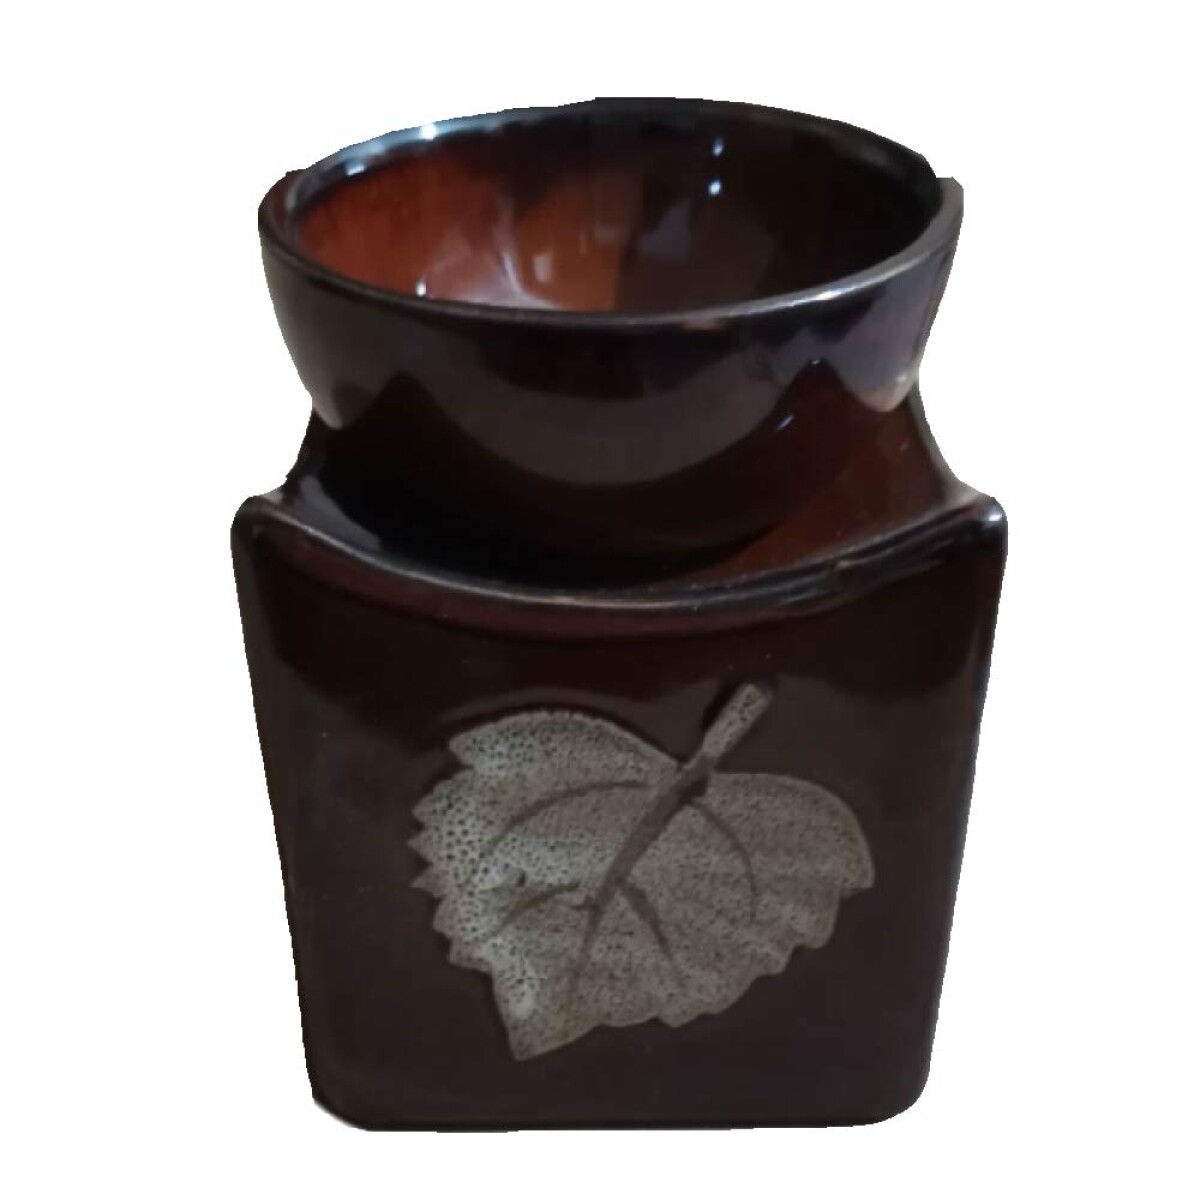 Horno Ceramica Con Hojita Medidas 8*9.7 Cm 